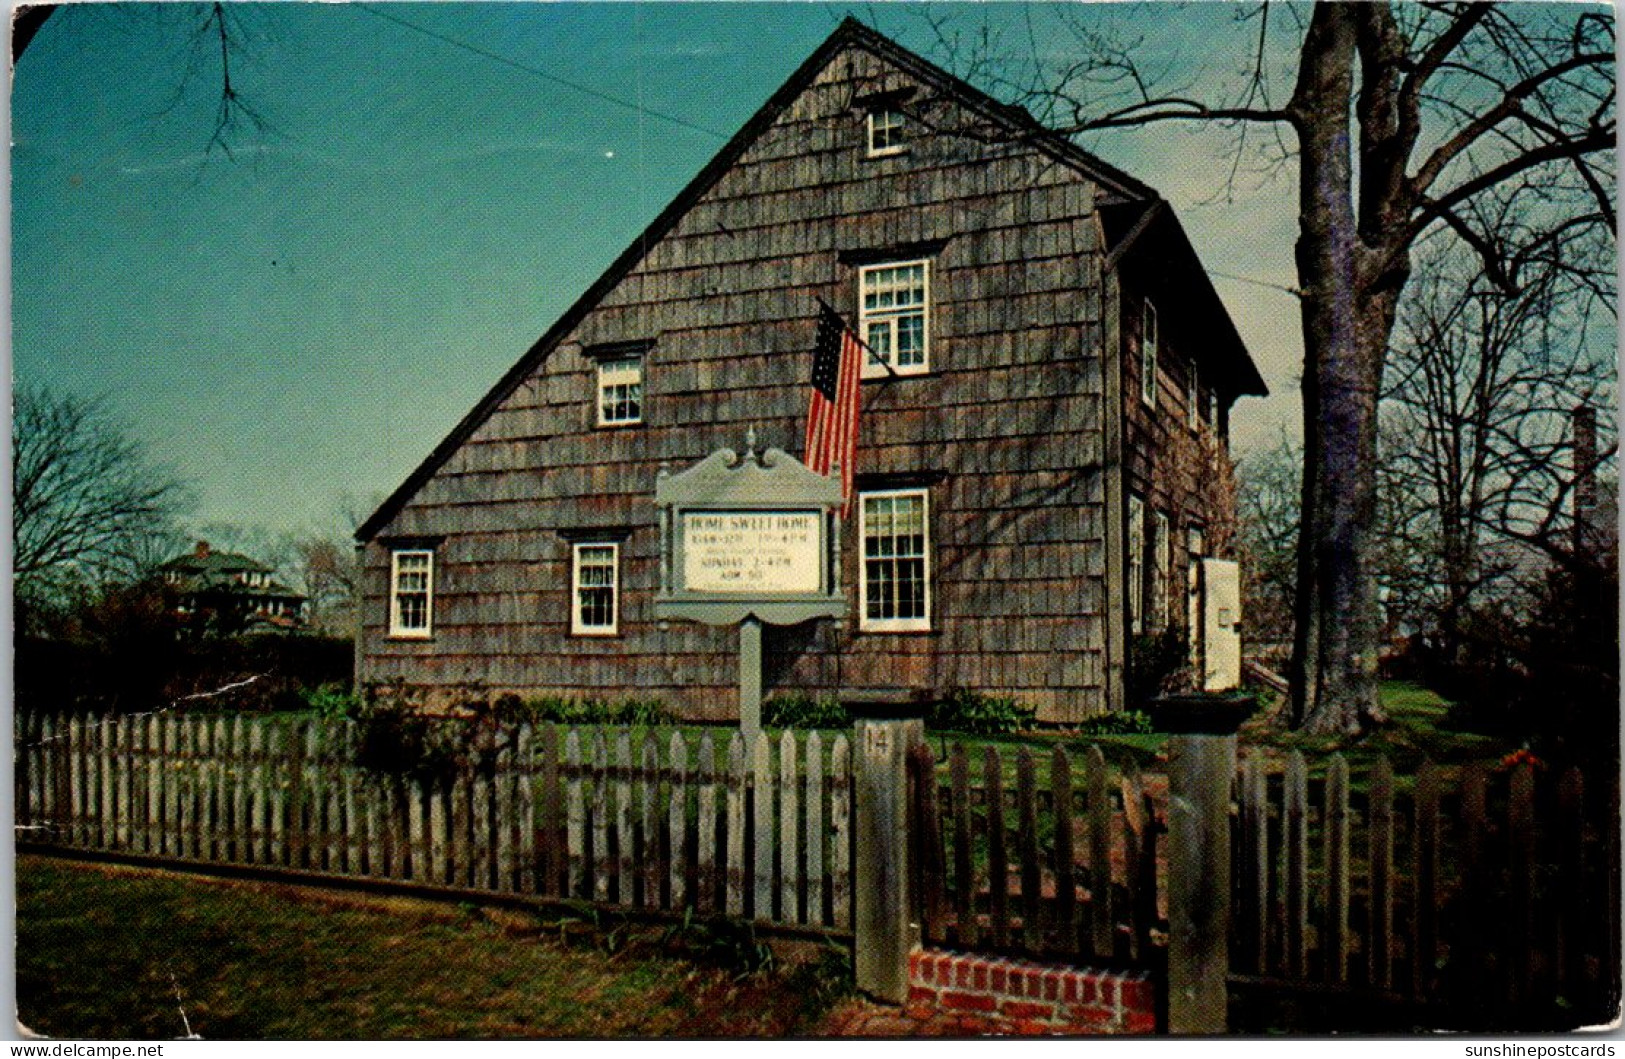 New York Long Island East Huntington "Home Sweet Home" 1963 - Long Island